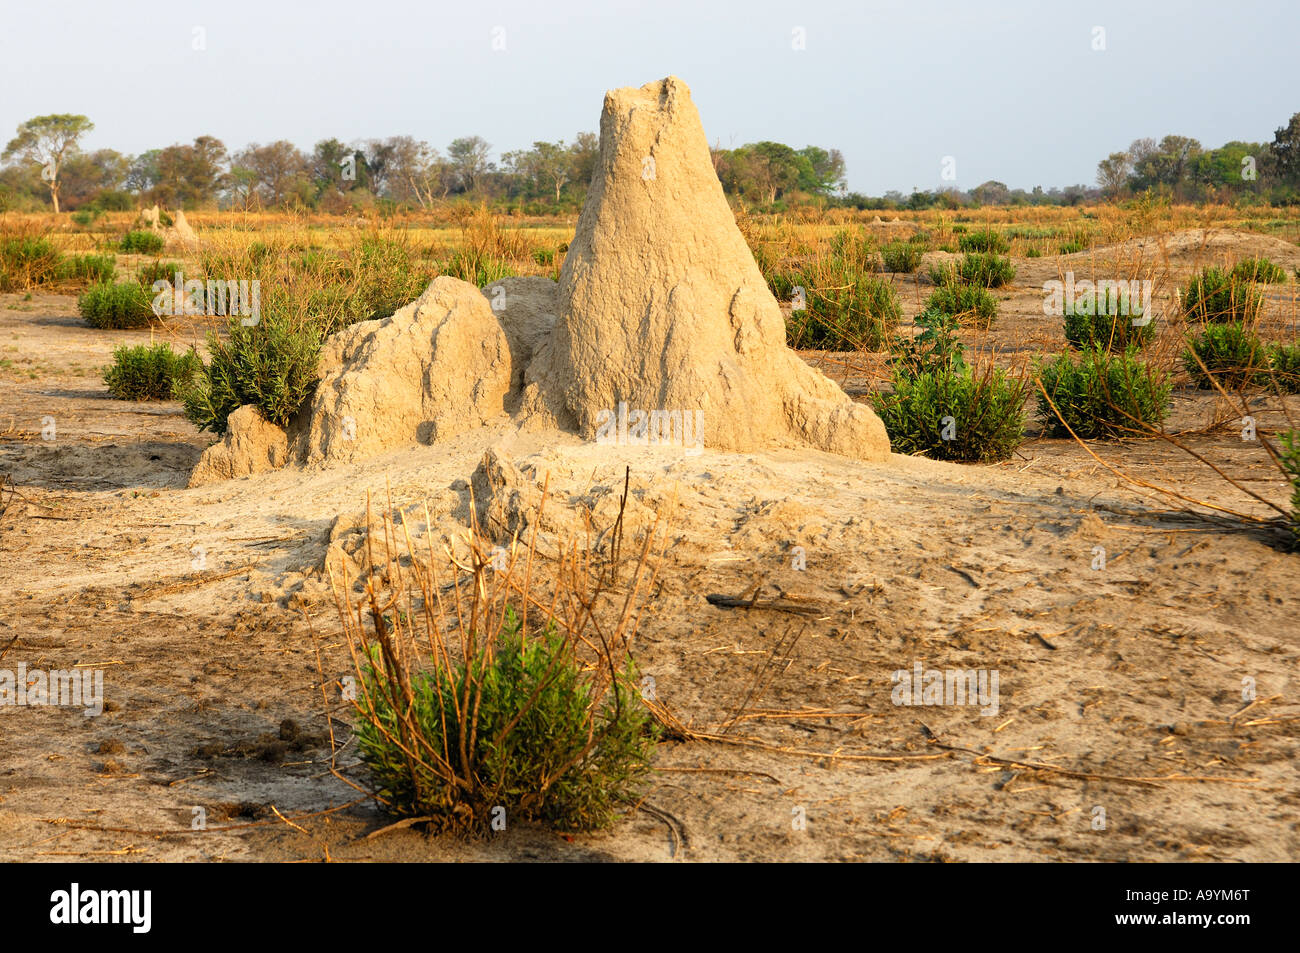 Termite mound, Okavango region, Botswana Stock Photo